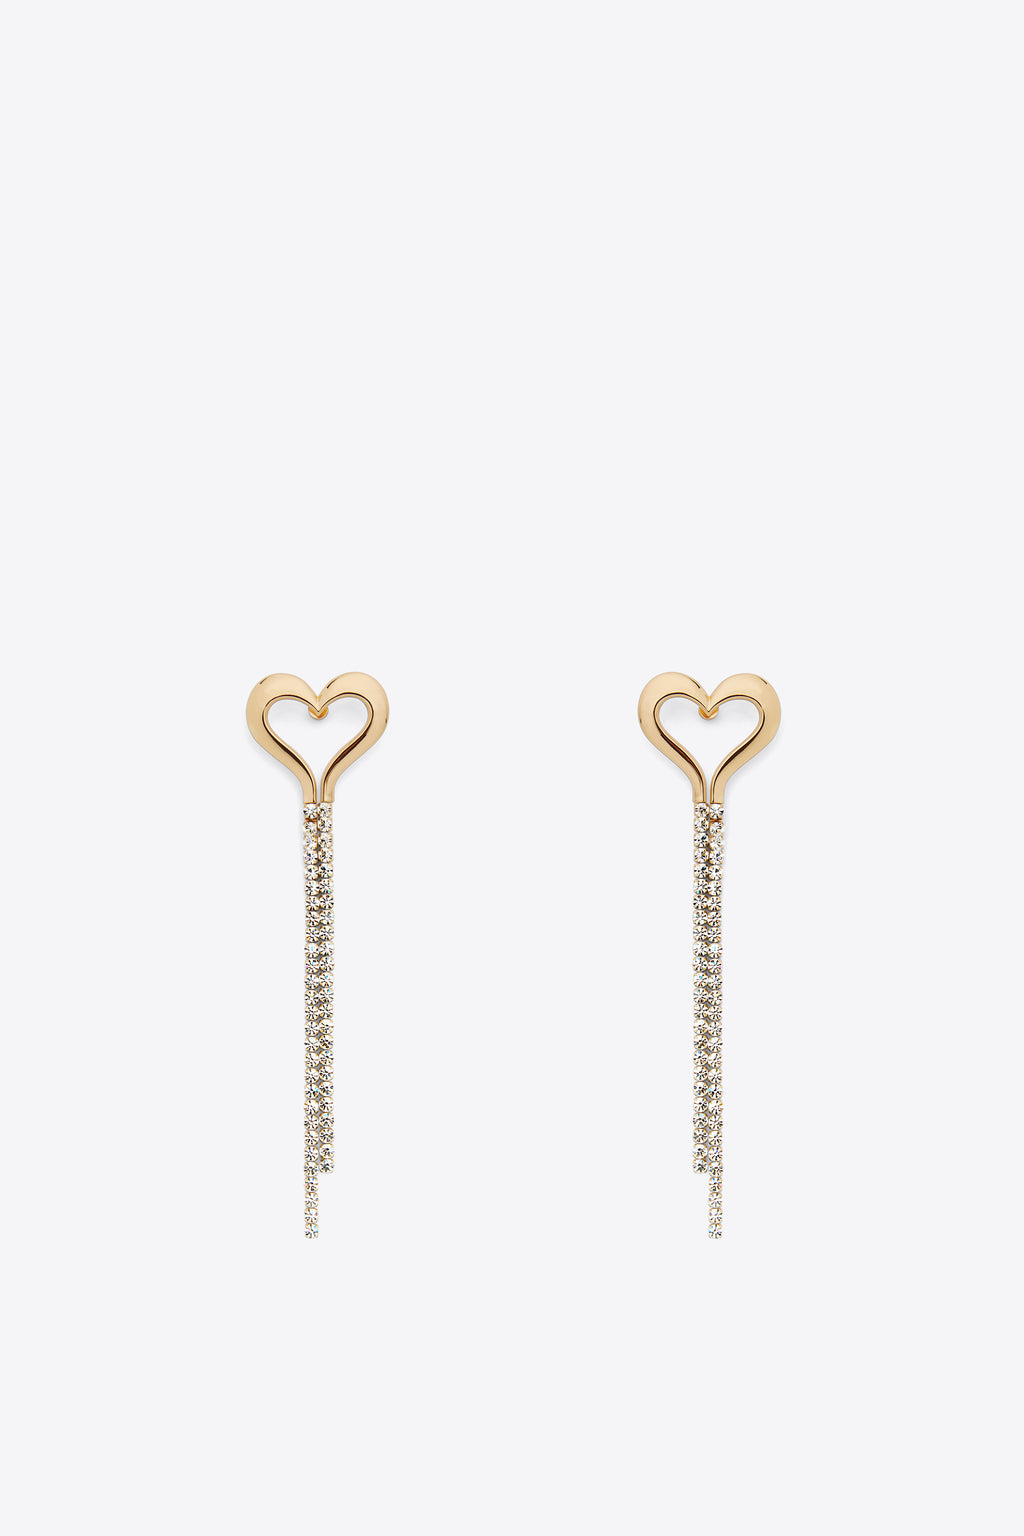 Crystal Heart Fringe Earrings